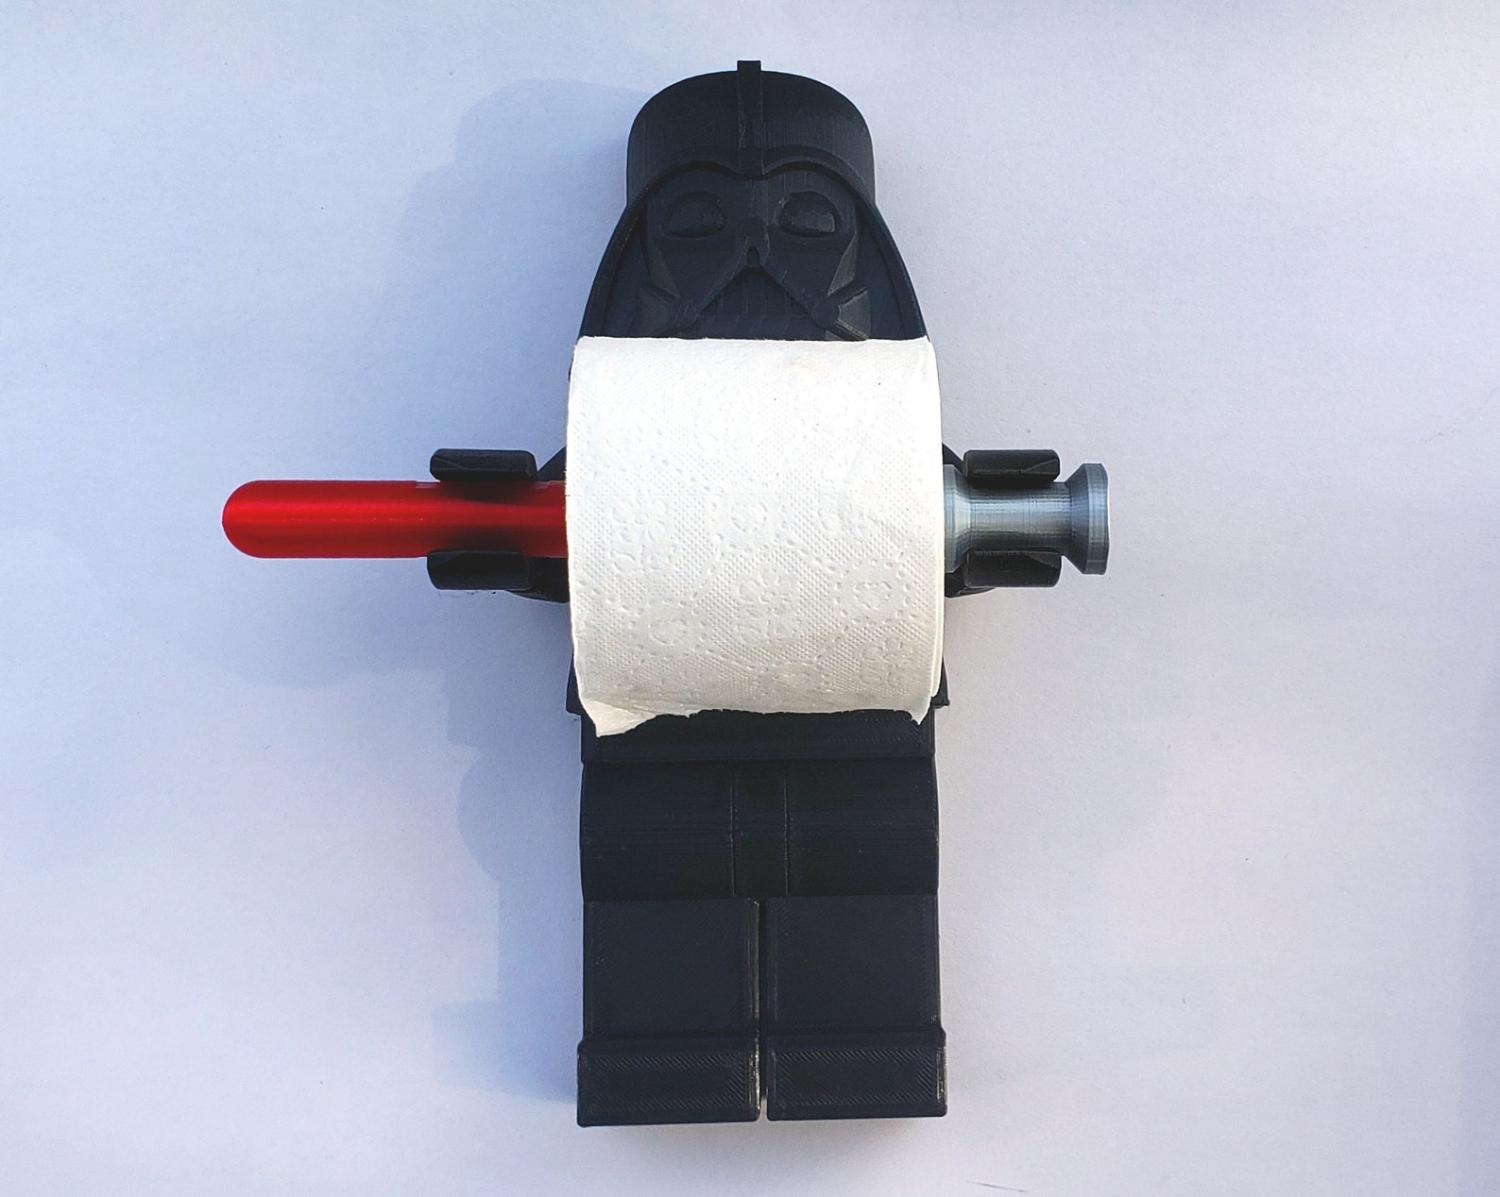 Star Wars Darth Vader Toilet Paper Holder